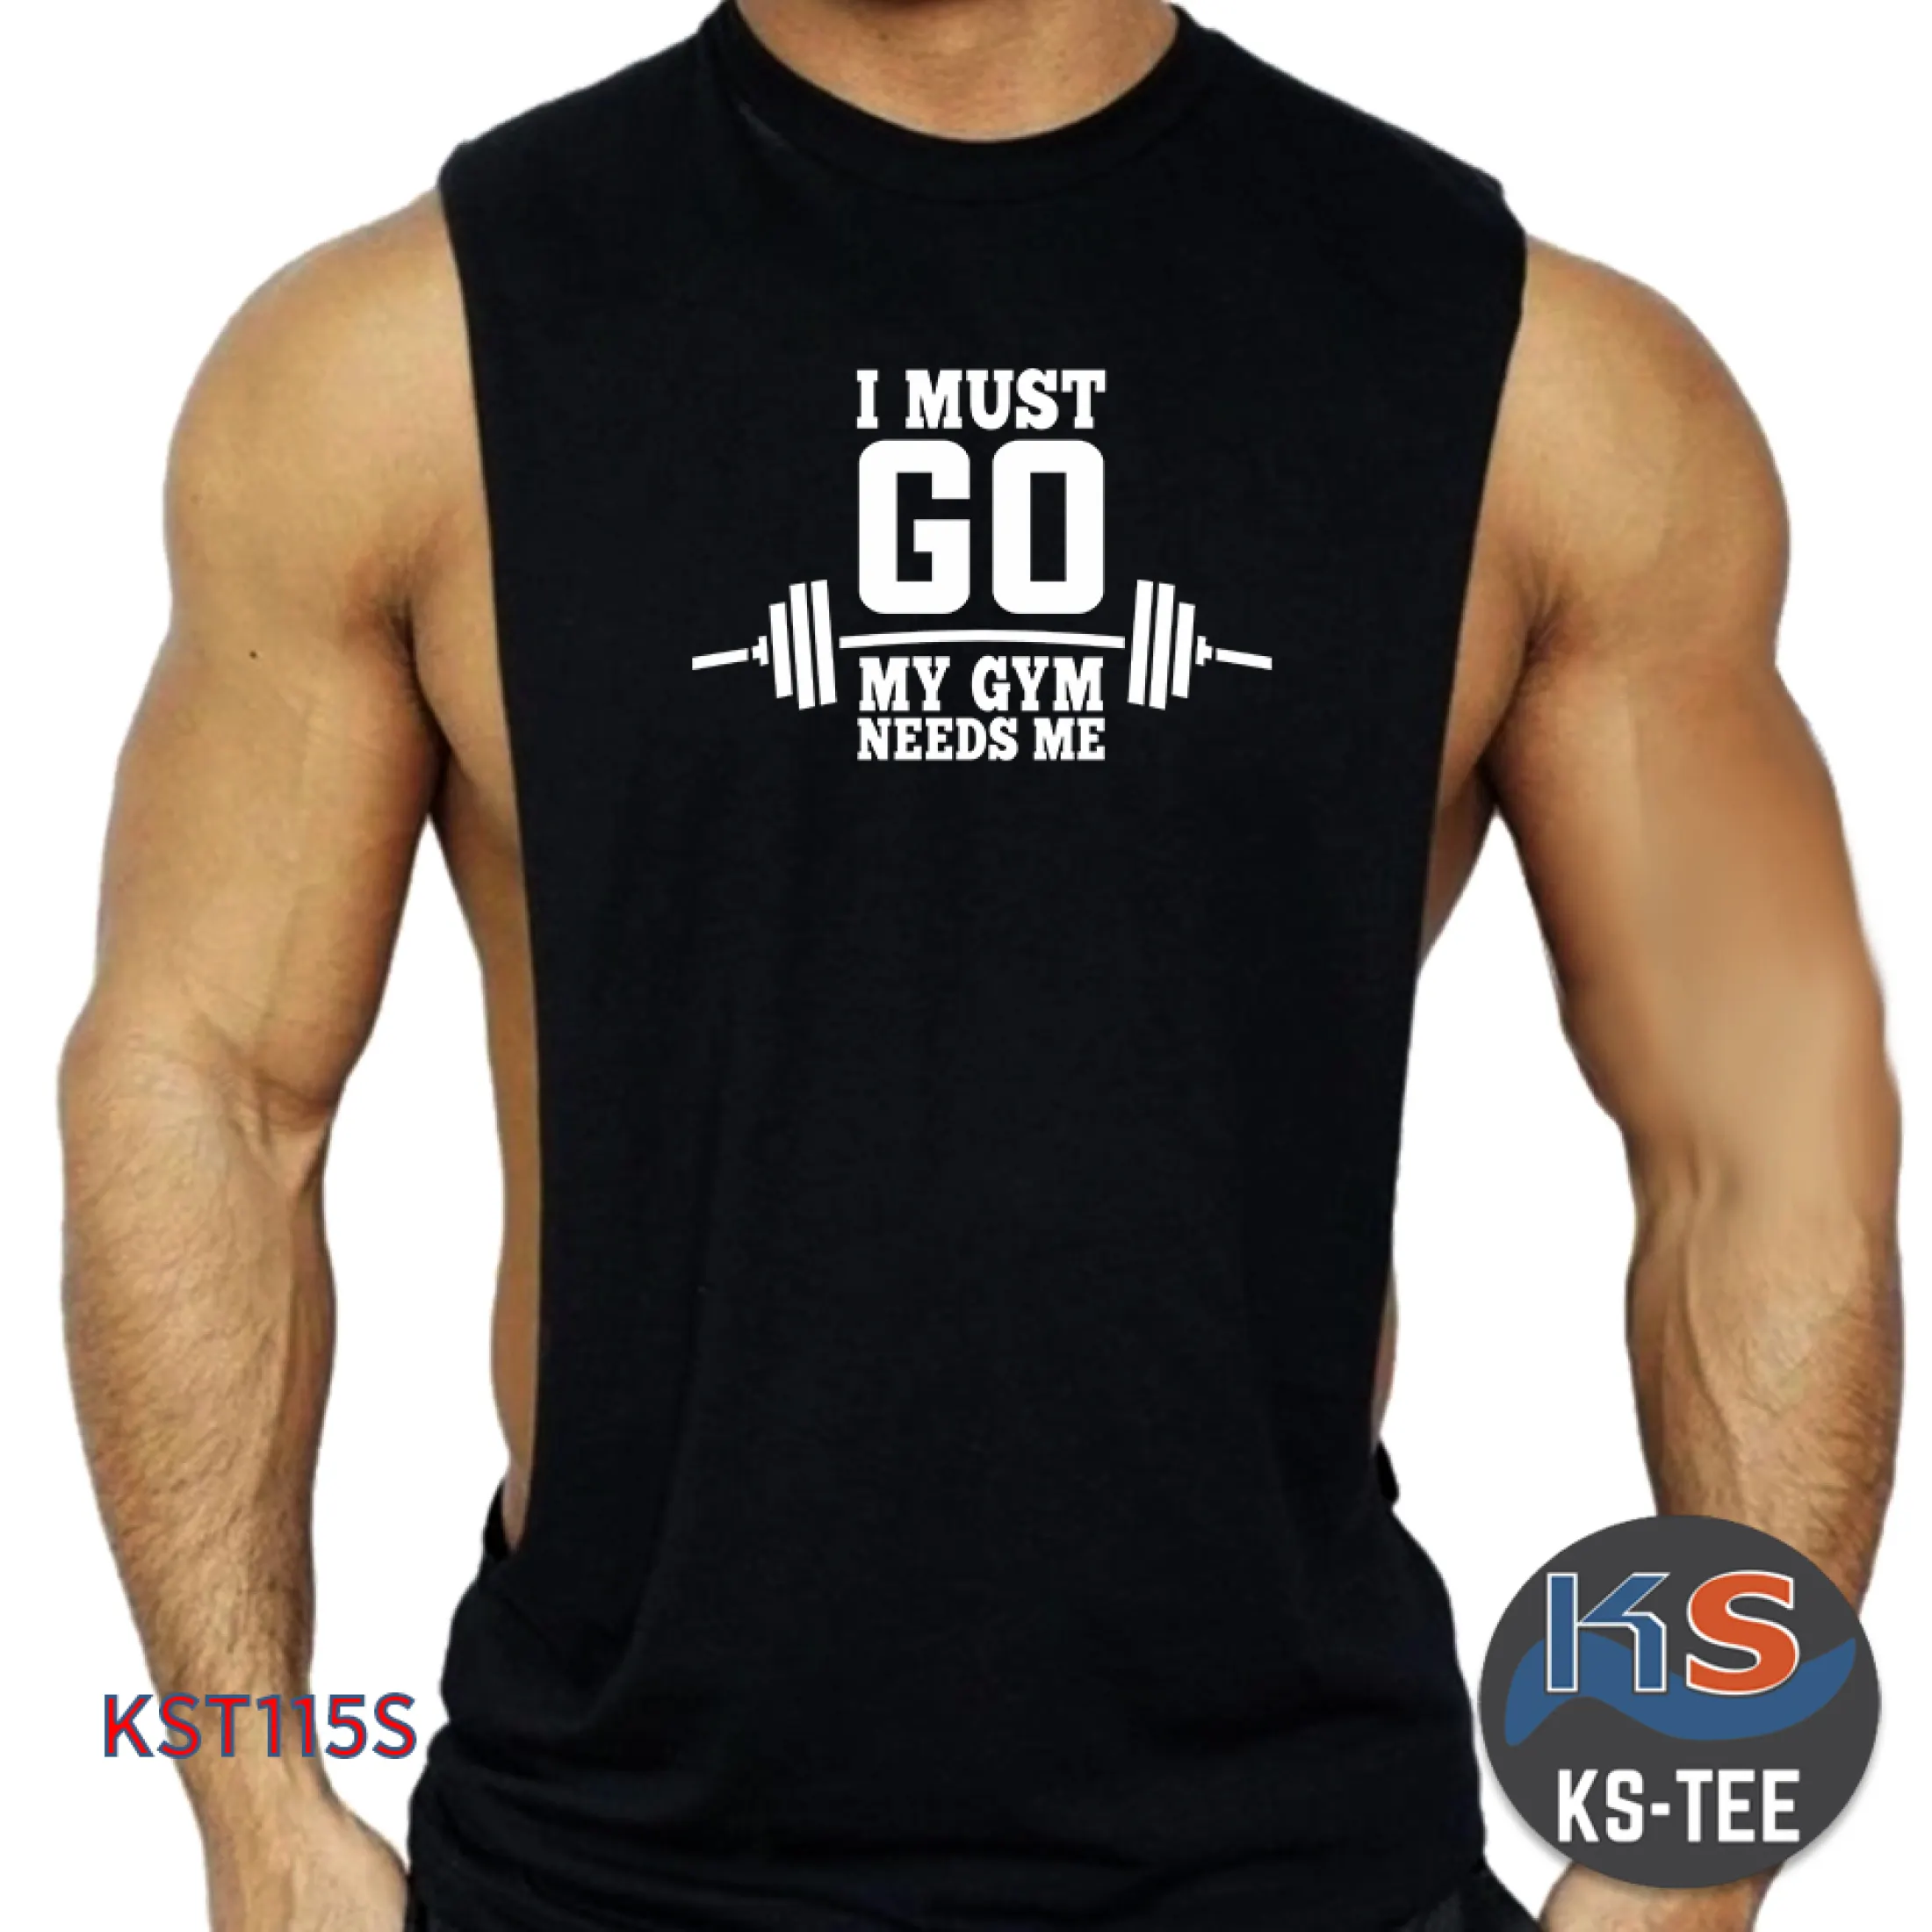 Stay hungry mens t shirt mens workout shirt bodybuilding gym t-shirt cool men t shirt mens exercise shirts mens fitness shirt